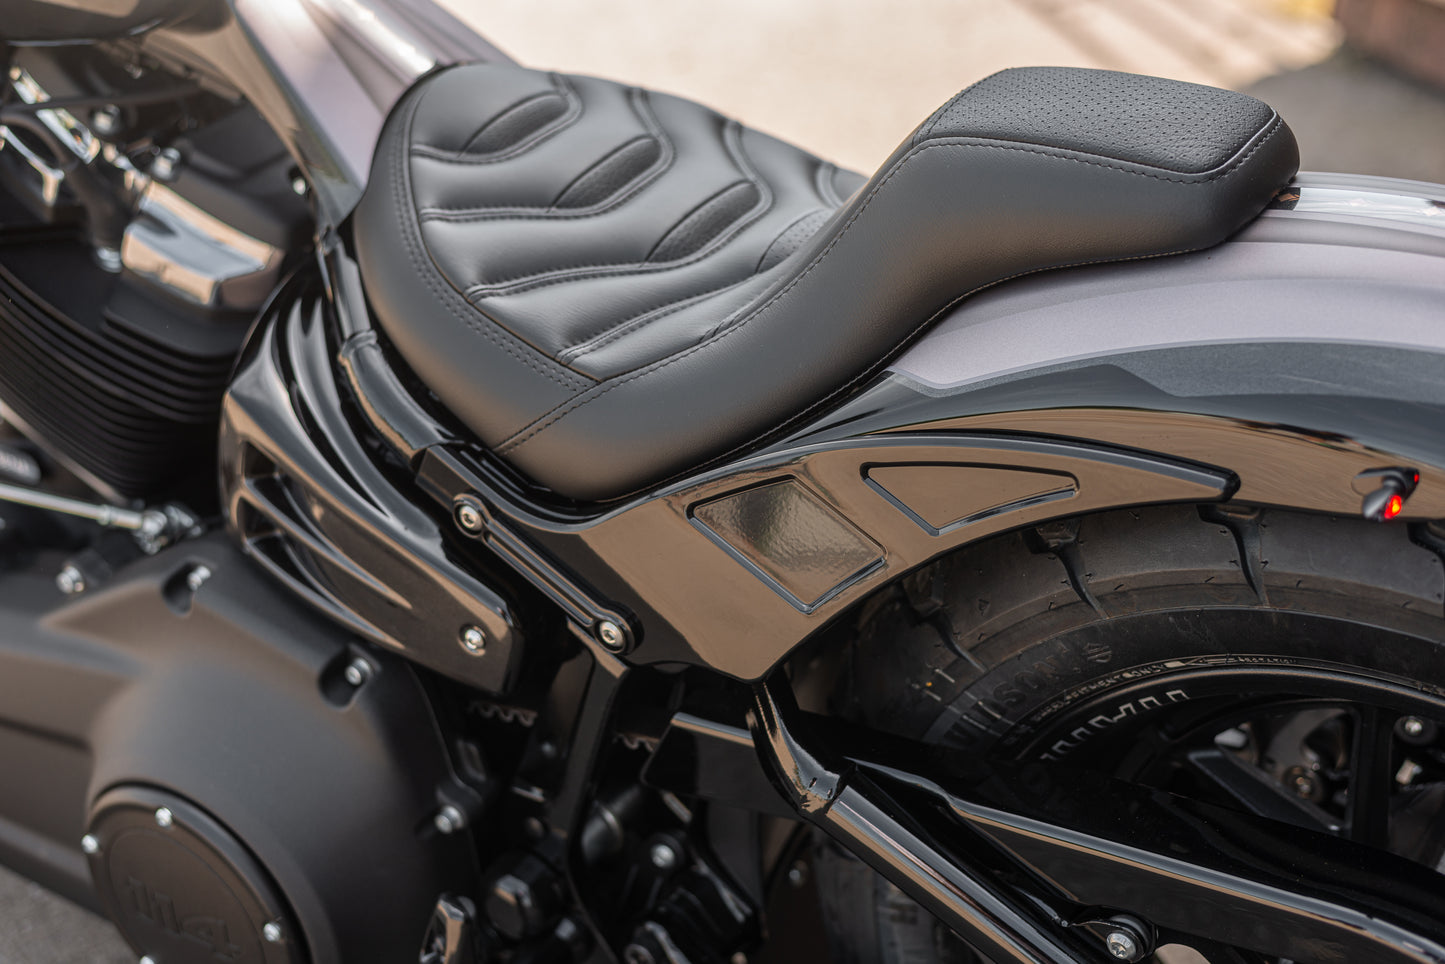 Zoomed Harley Davidson motorcycle with Killer Custom "Bobbstr" rear fender from the rear side 